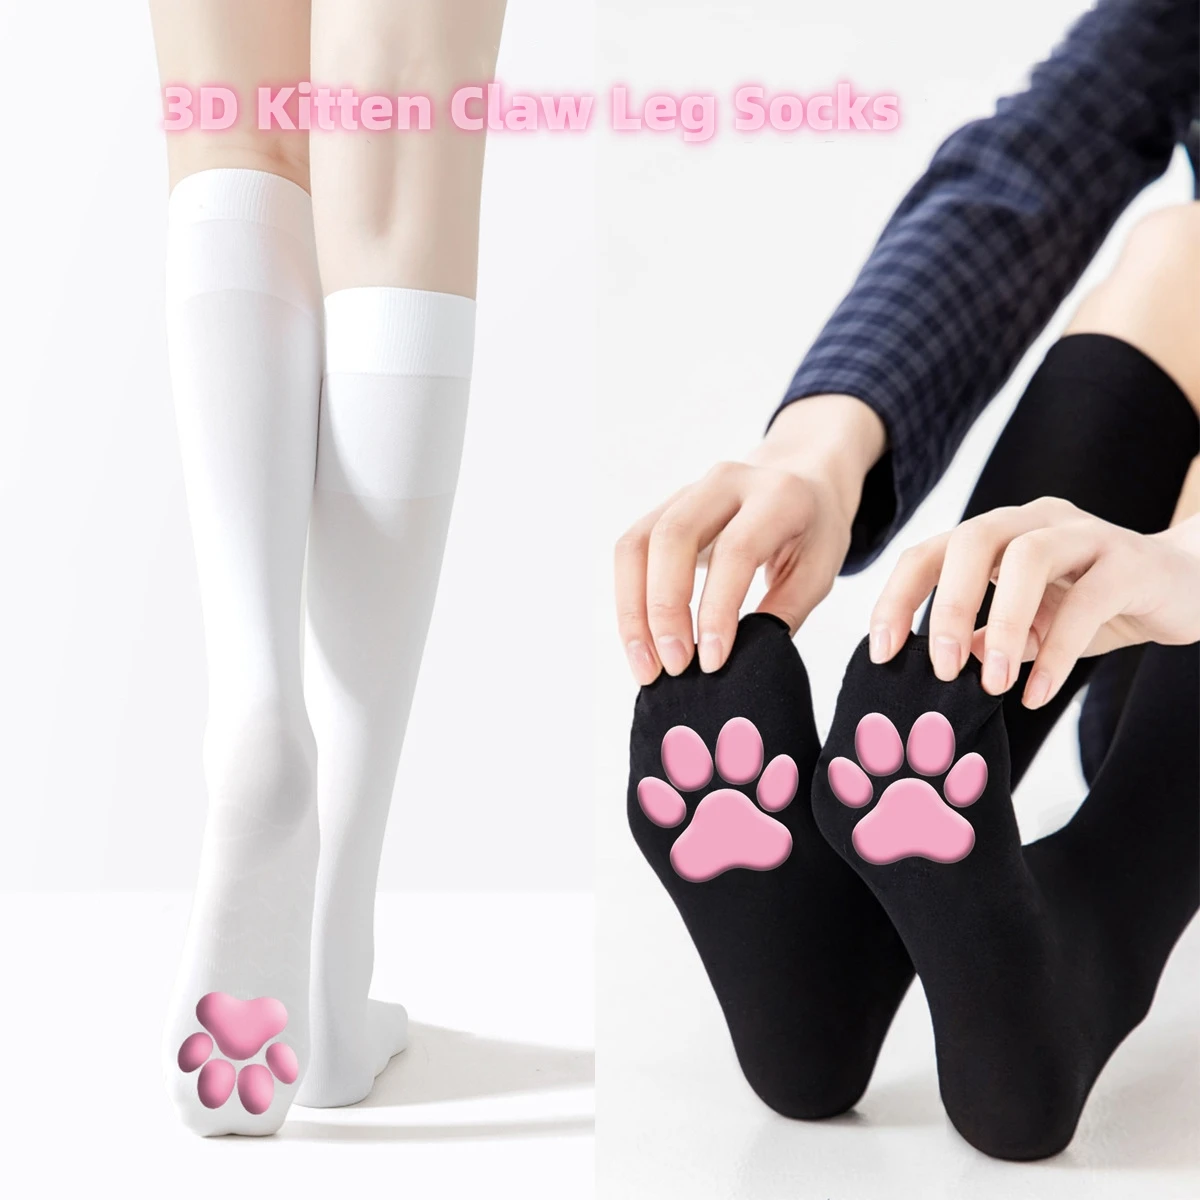 

Hot Cat Paw Pad Harajuku Leg Socks Pink Cute Lolita JK Girl Cosplay Silicone anti-skid 3D Kitten Claw Leg Socks For Scholl Girl